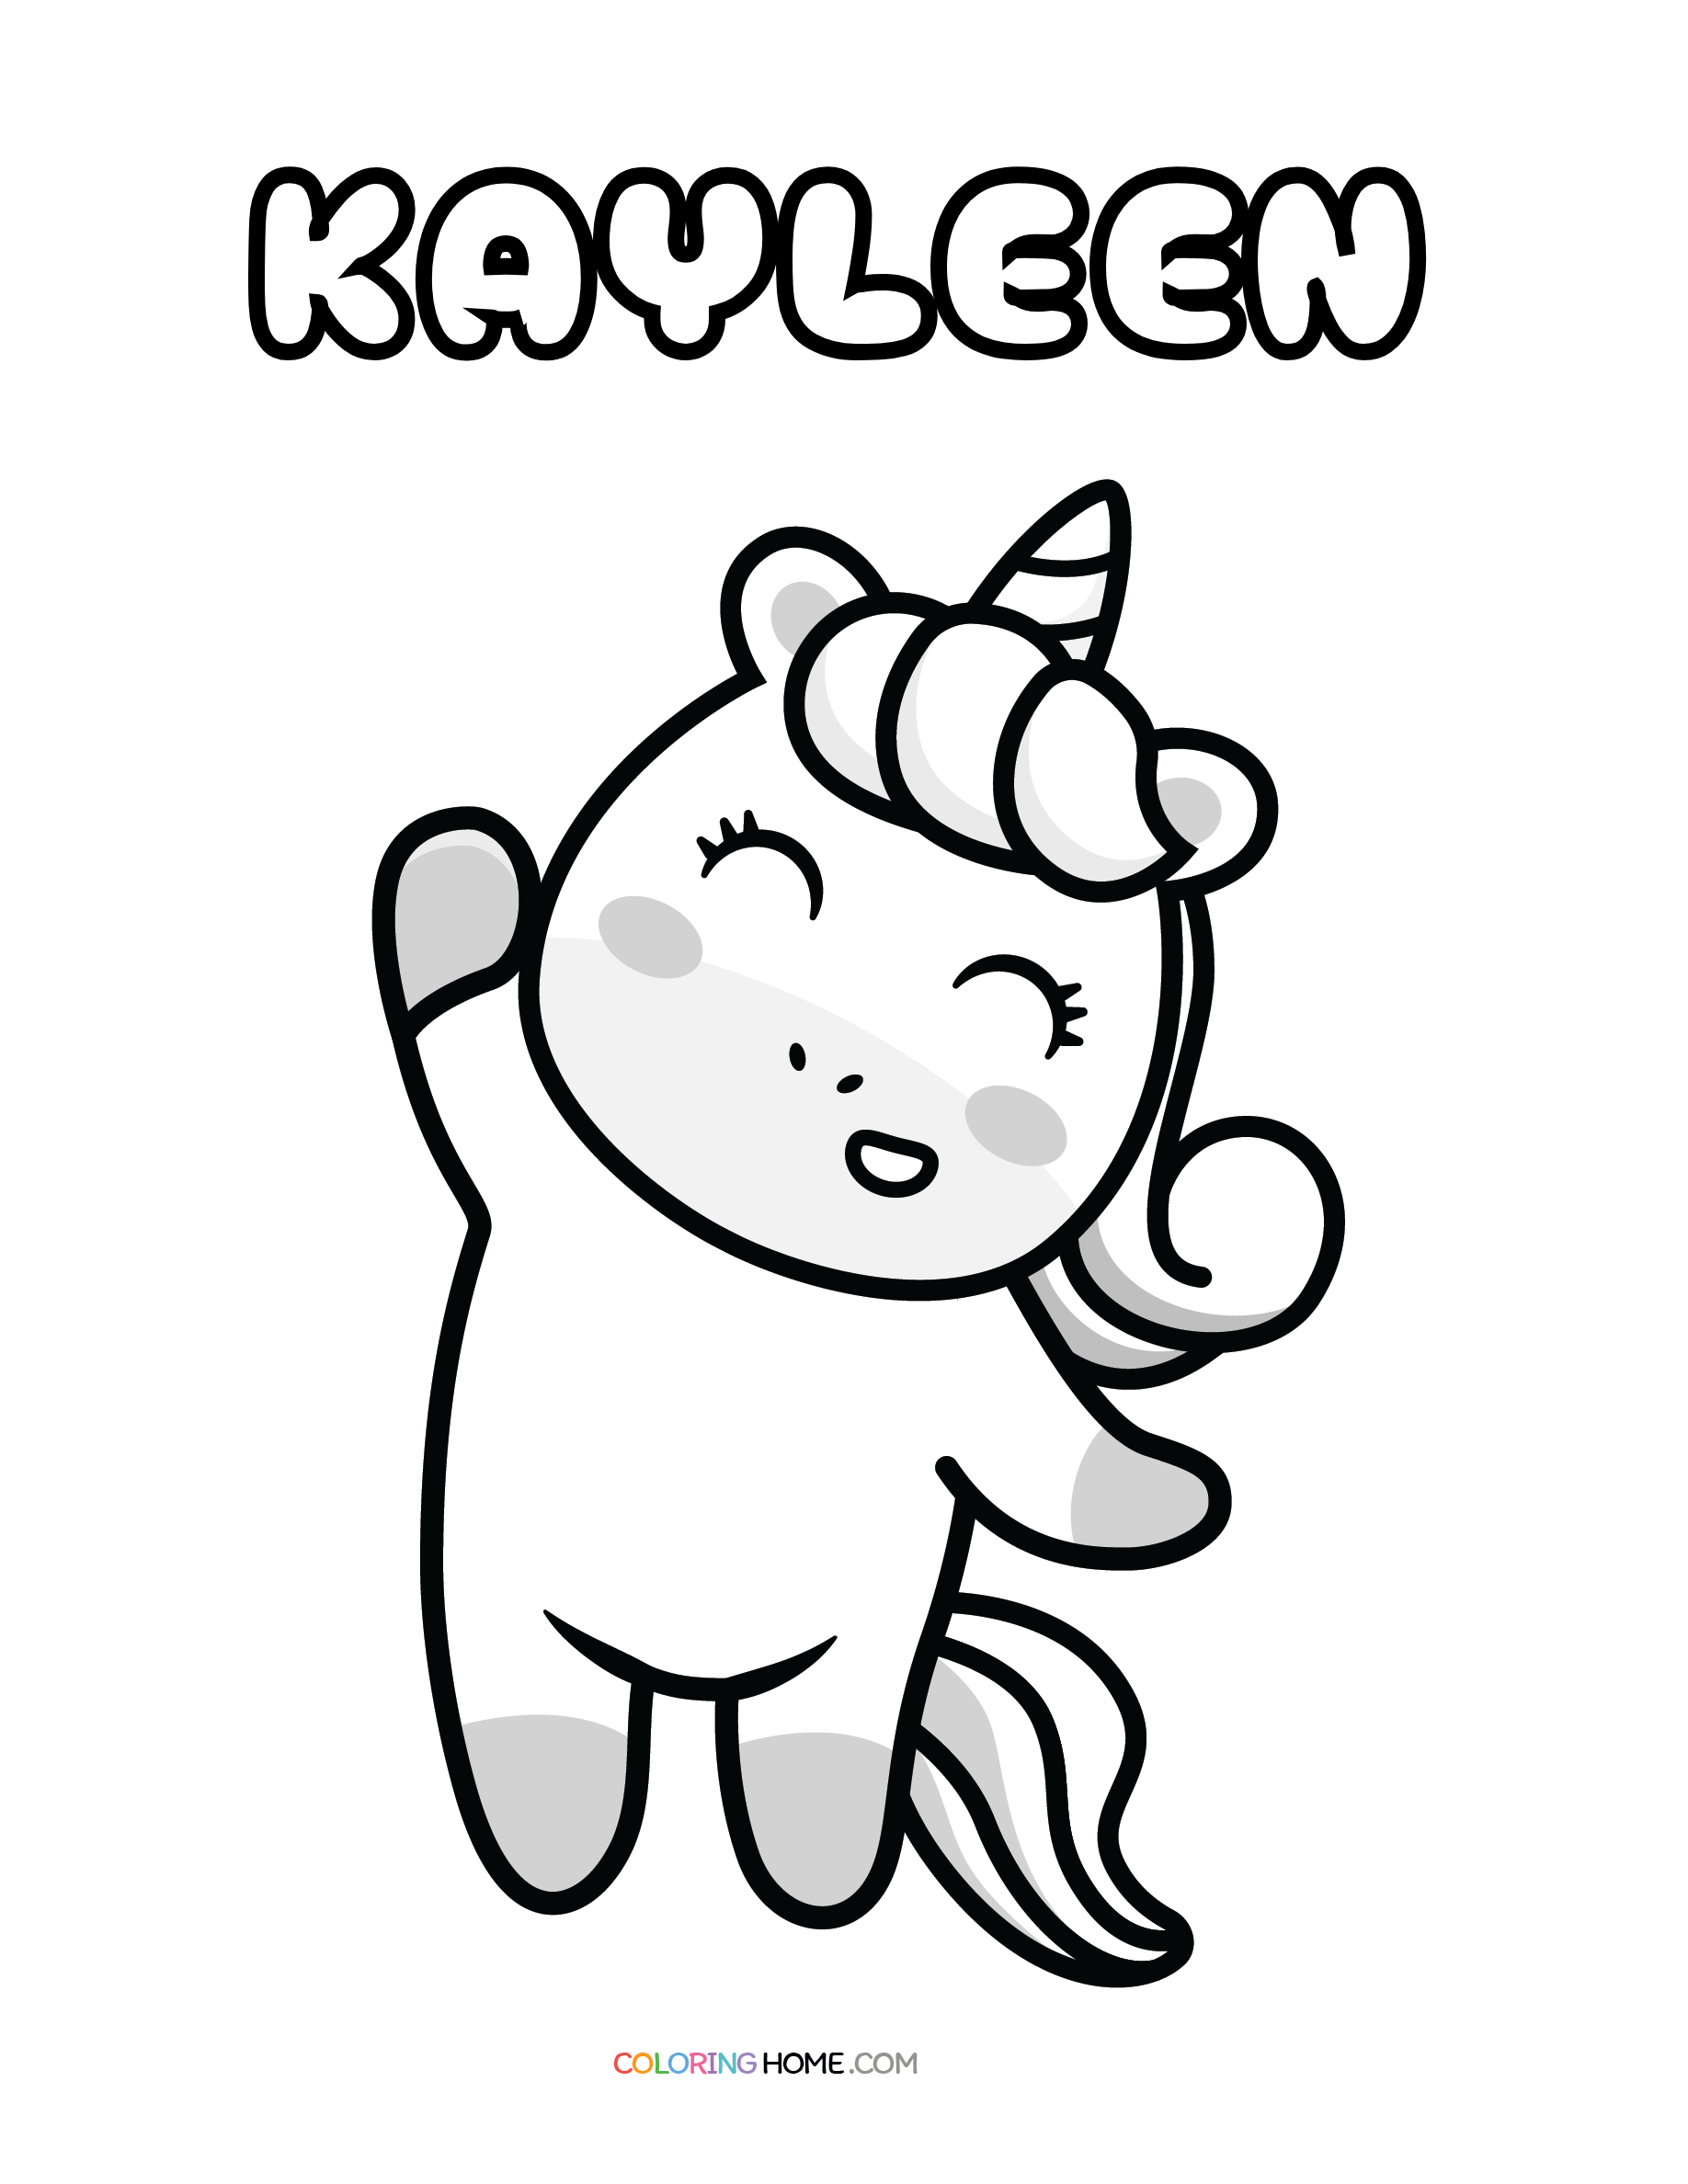 Kayleen unicorn coloring page